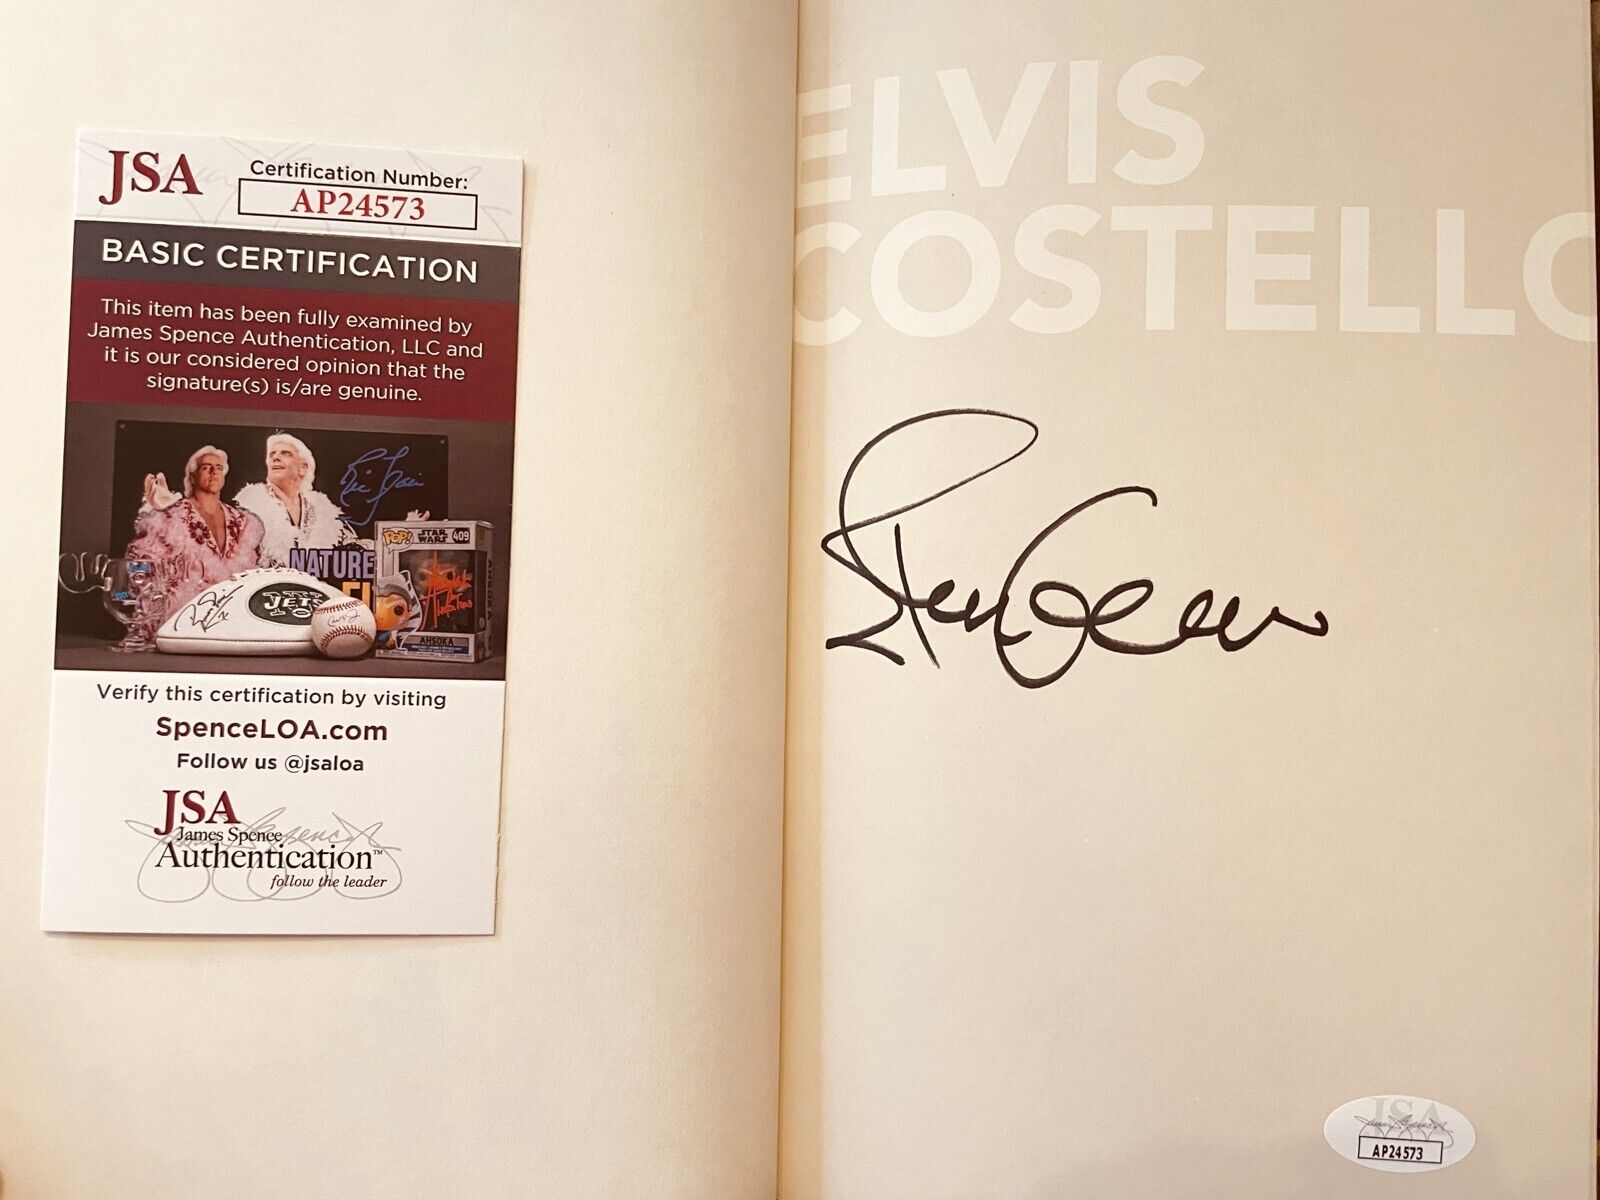 Elvis Costello autograph signed Unfaithful Music 1st edition hardcover book JSA